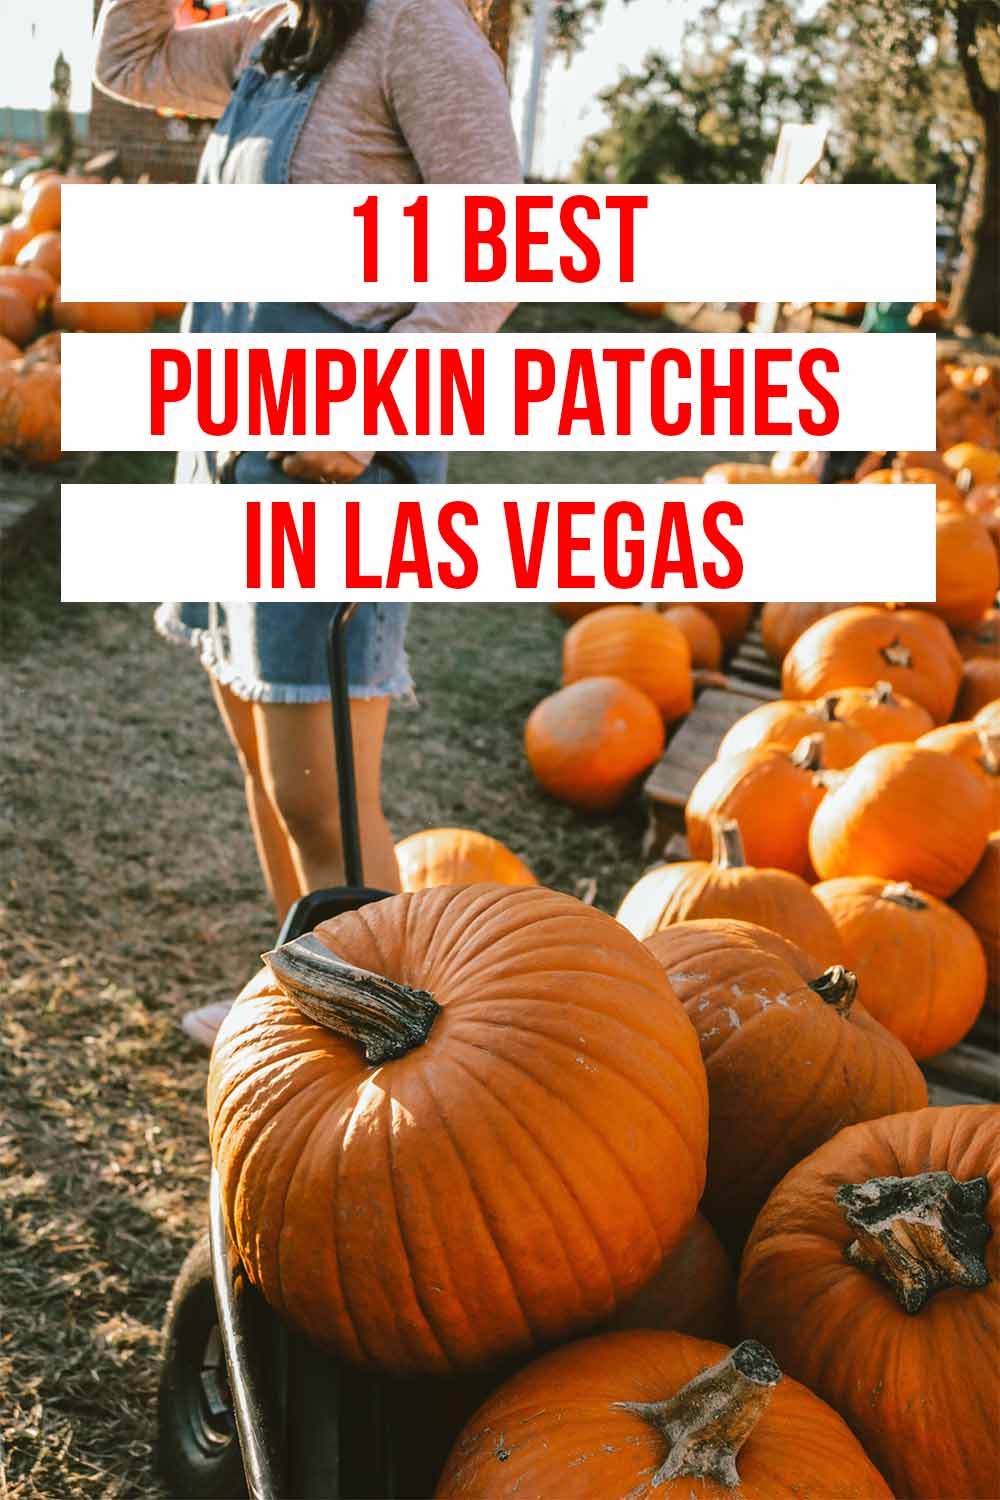 Pumpkin Patches in Las Vegas